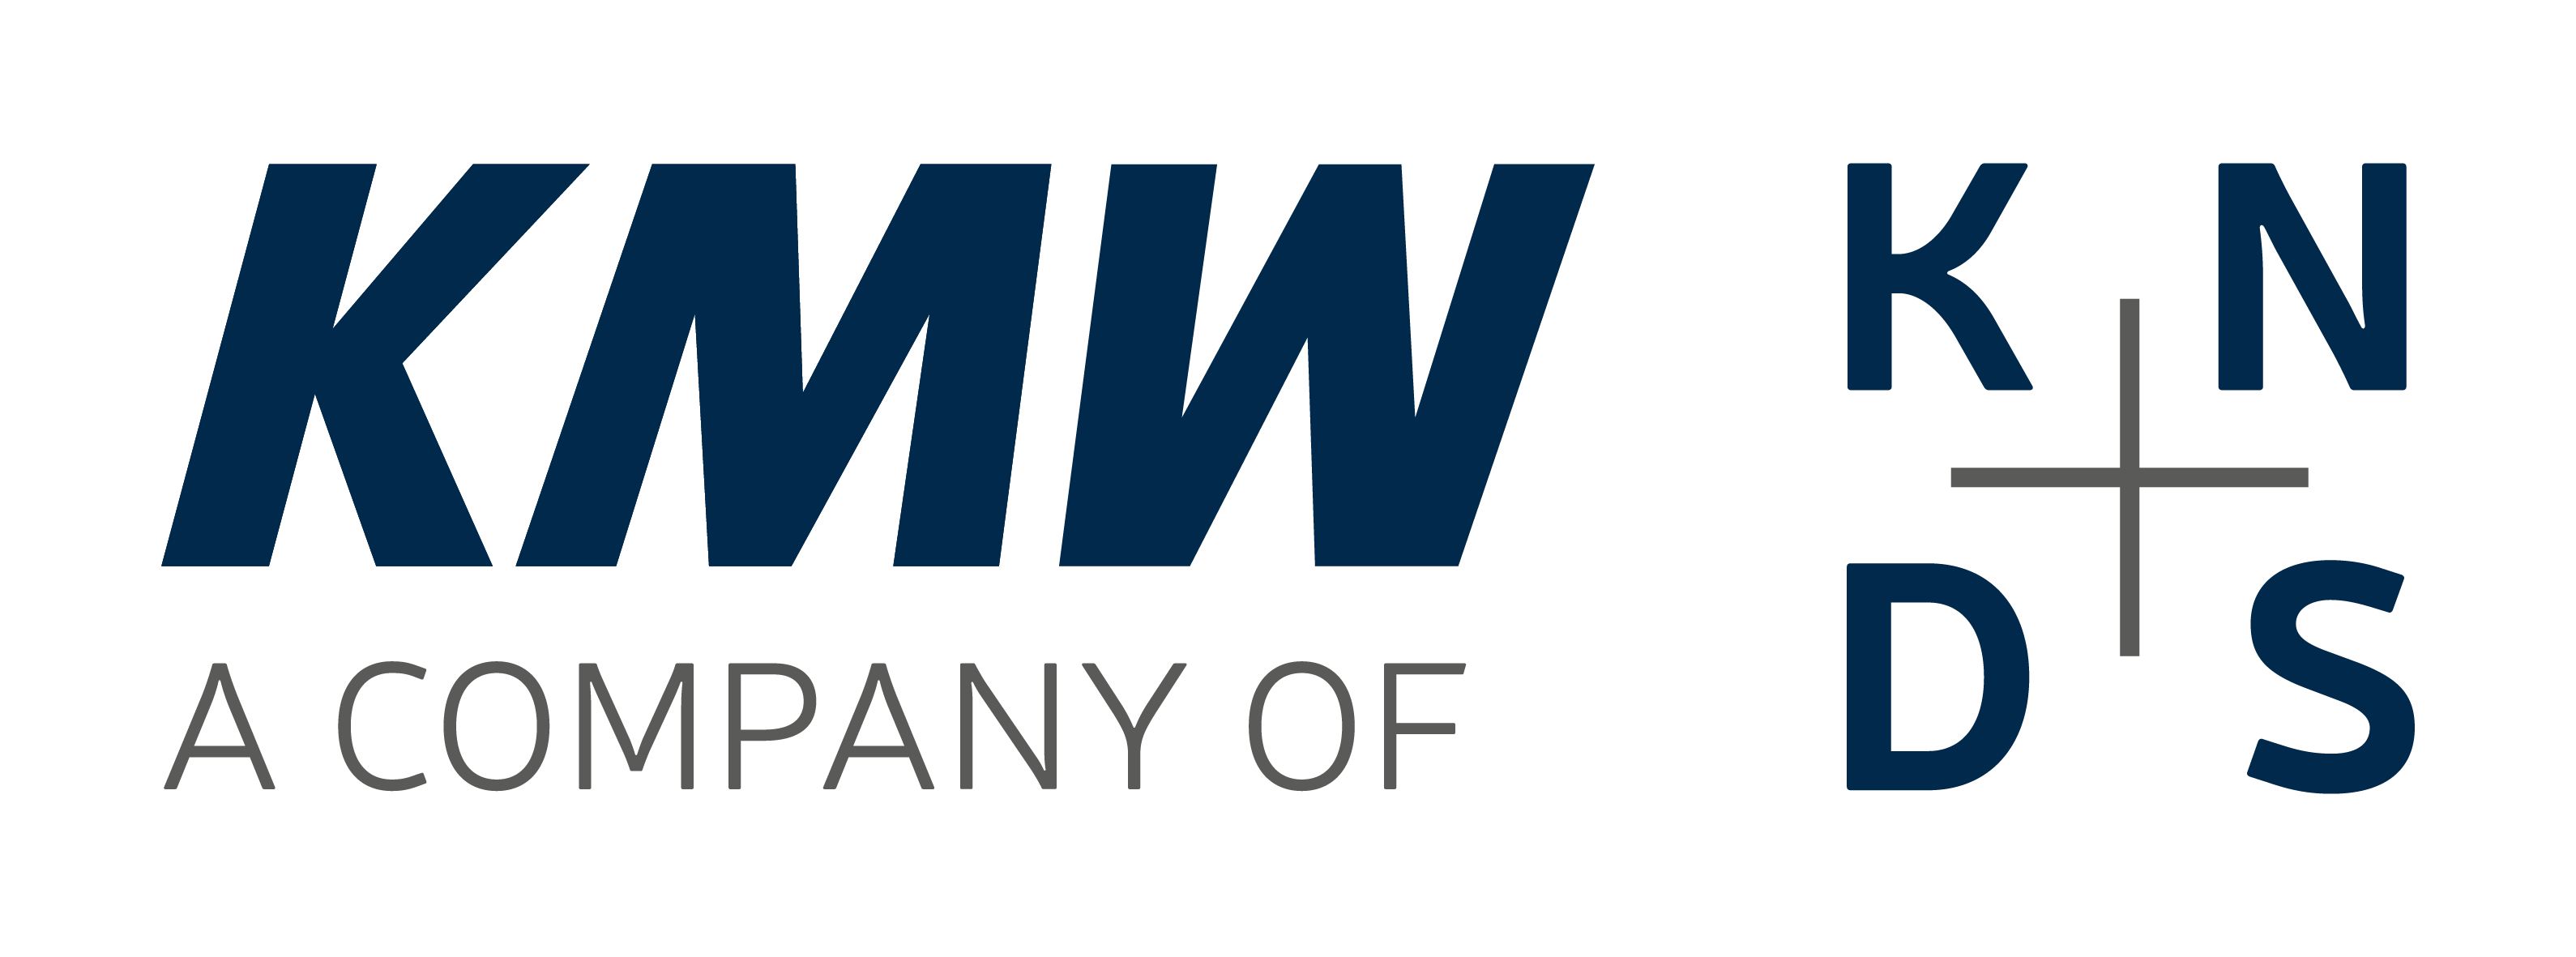 KMW a company of KNDS (RGB)